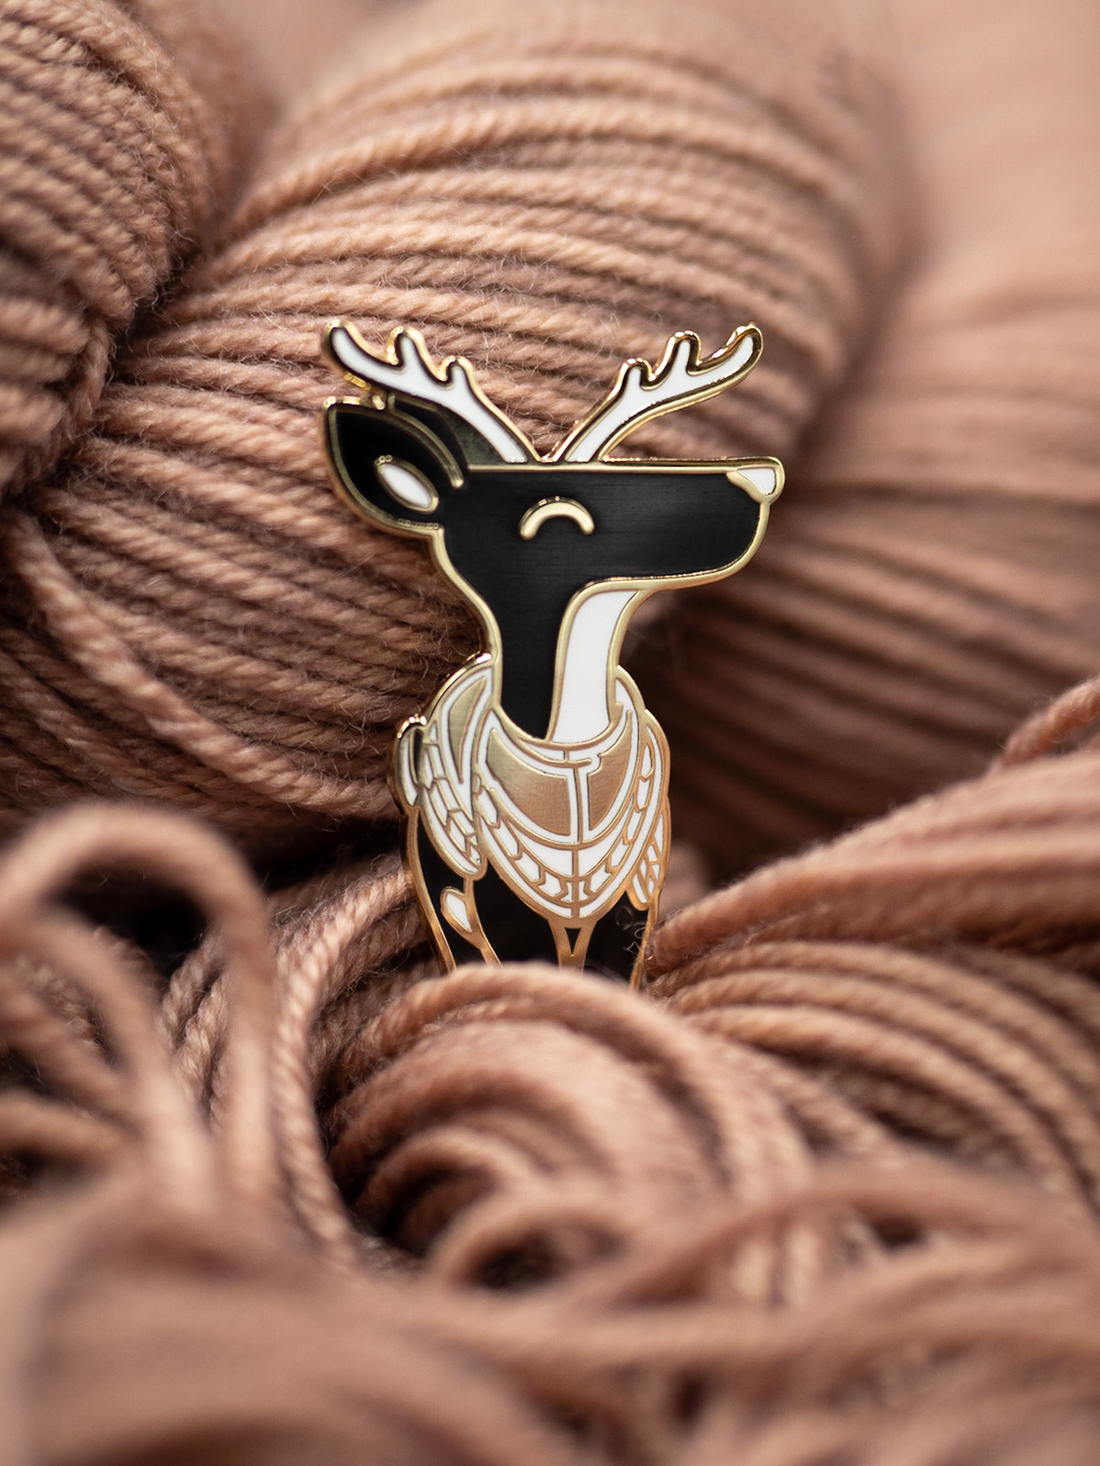 Jill the White-Tailed Deer (enamel pin)